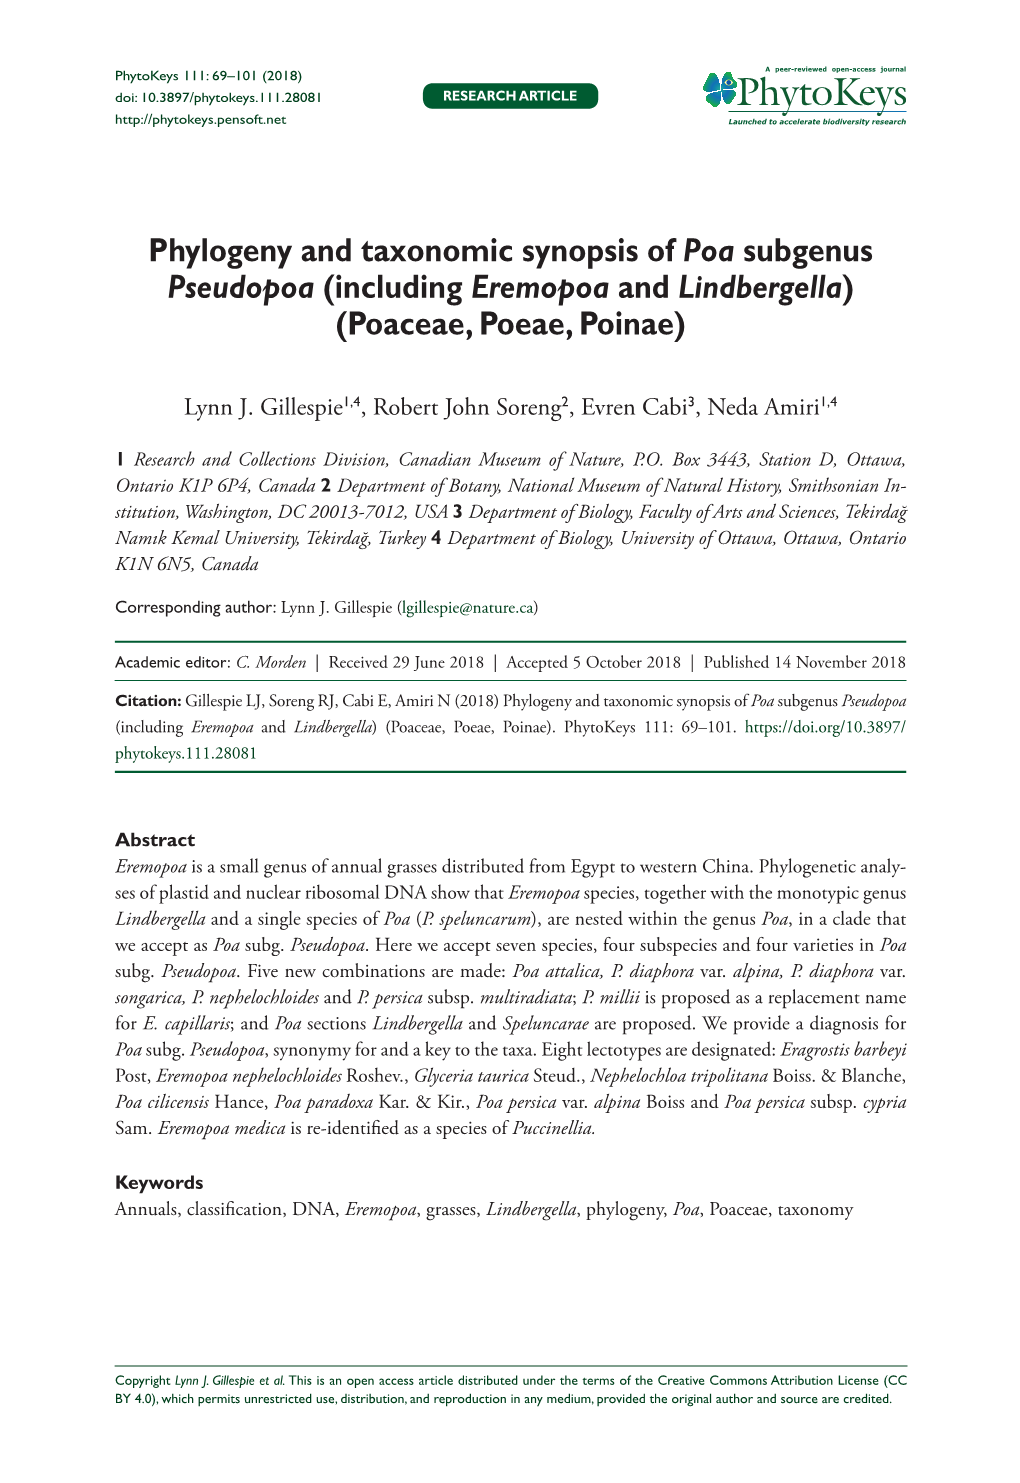 Phylogeny and Taxonomic Synopsis of Poa Subgenus Pseudopoa (Including Eremopoa and Lindbergella) (Poaceae, Poeae, Poinae)